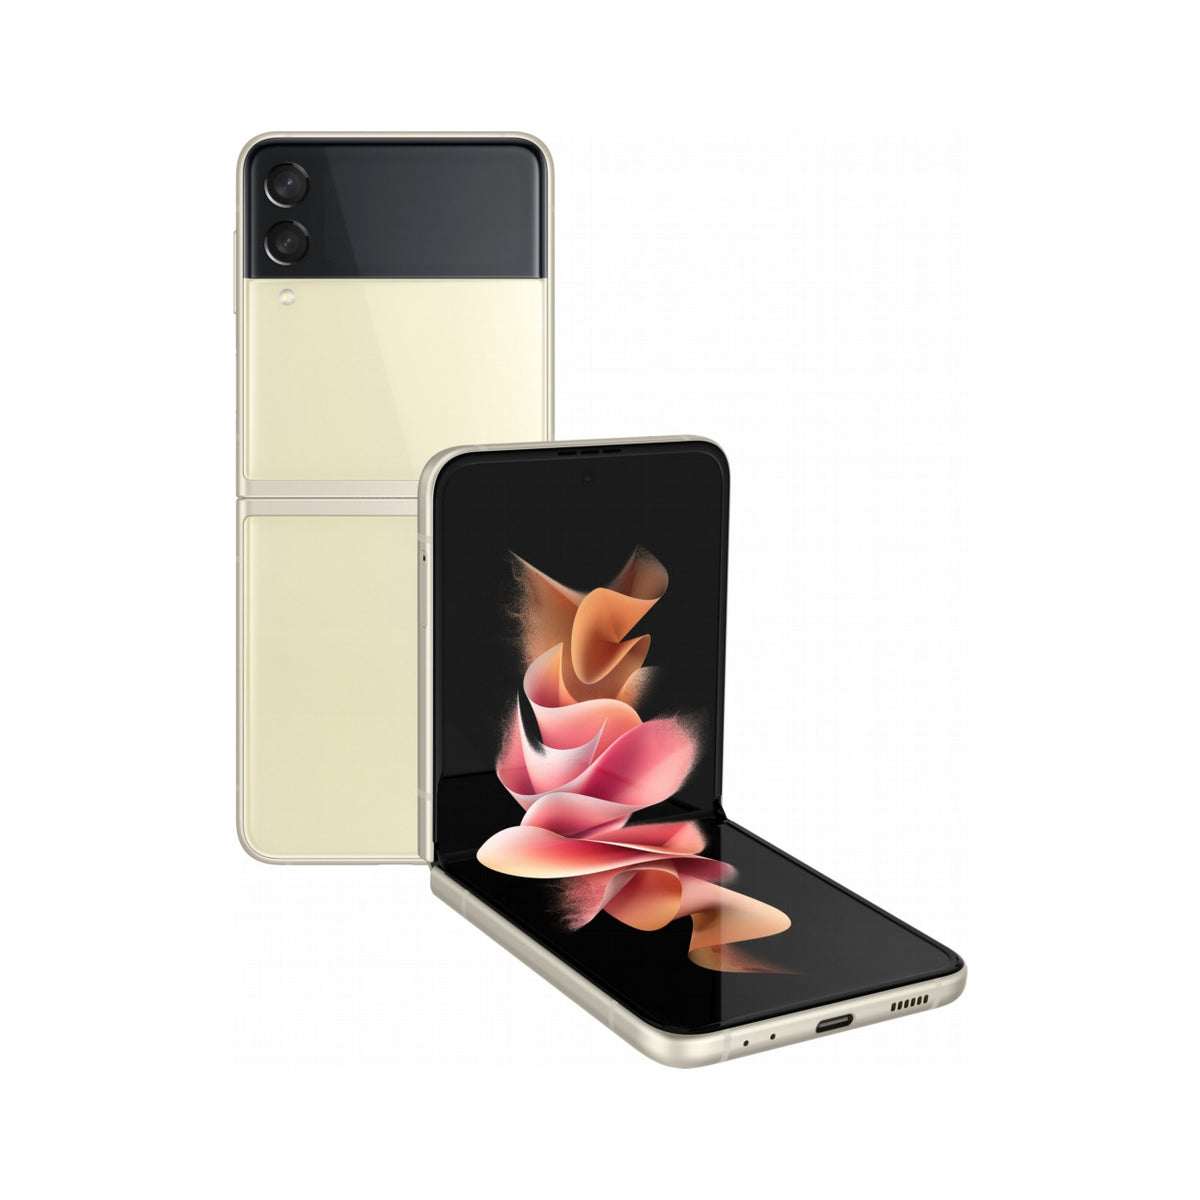 Samsung Galaxy Z Flip3 5G - Very Good Condition